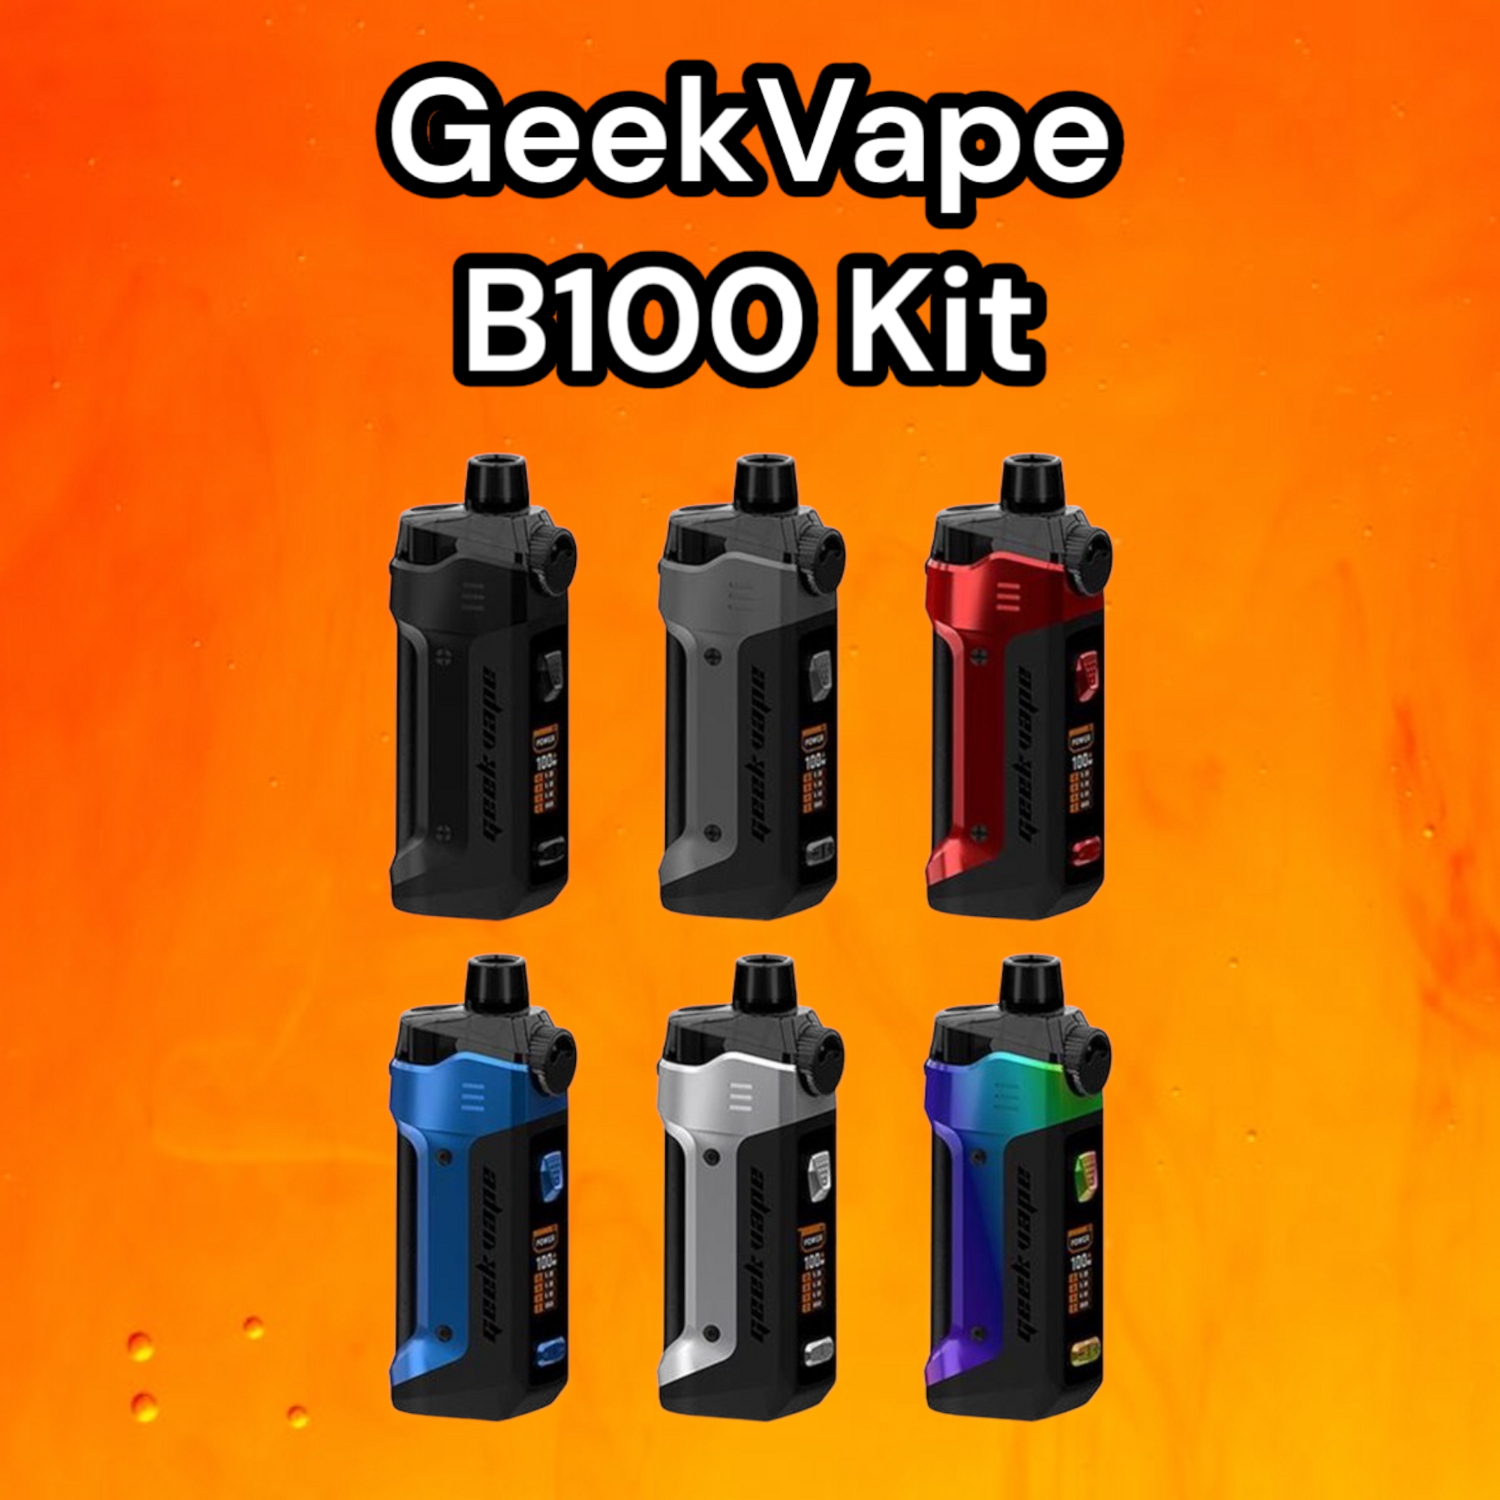 Geekvape B100 Kit